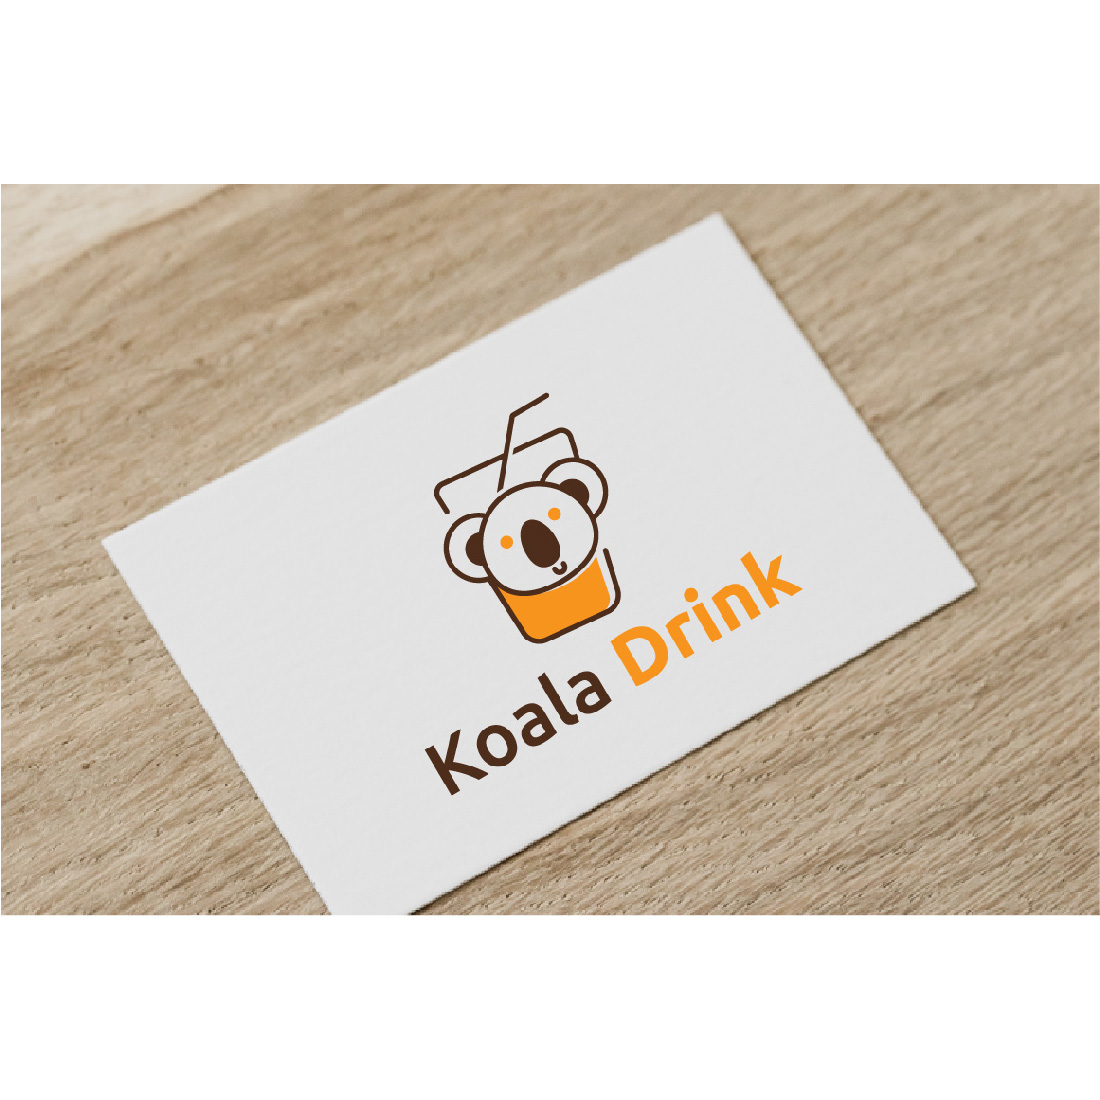 Adorable Fresh Fruit Koala Drink Glass Mascot Logo cover.